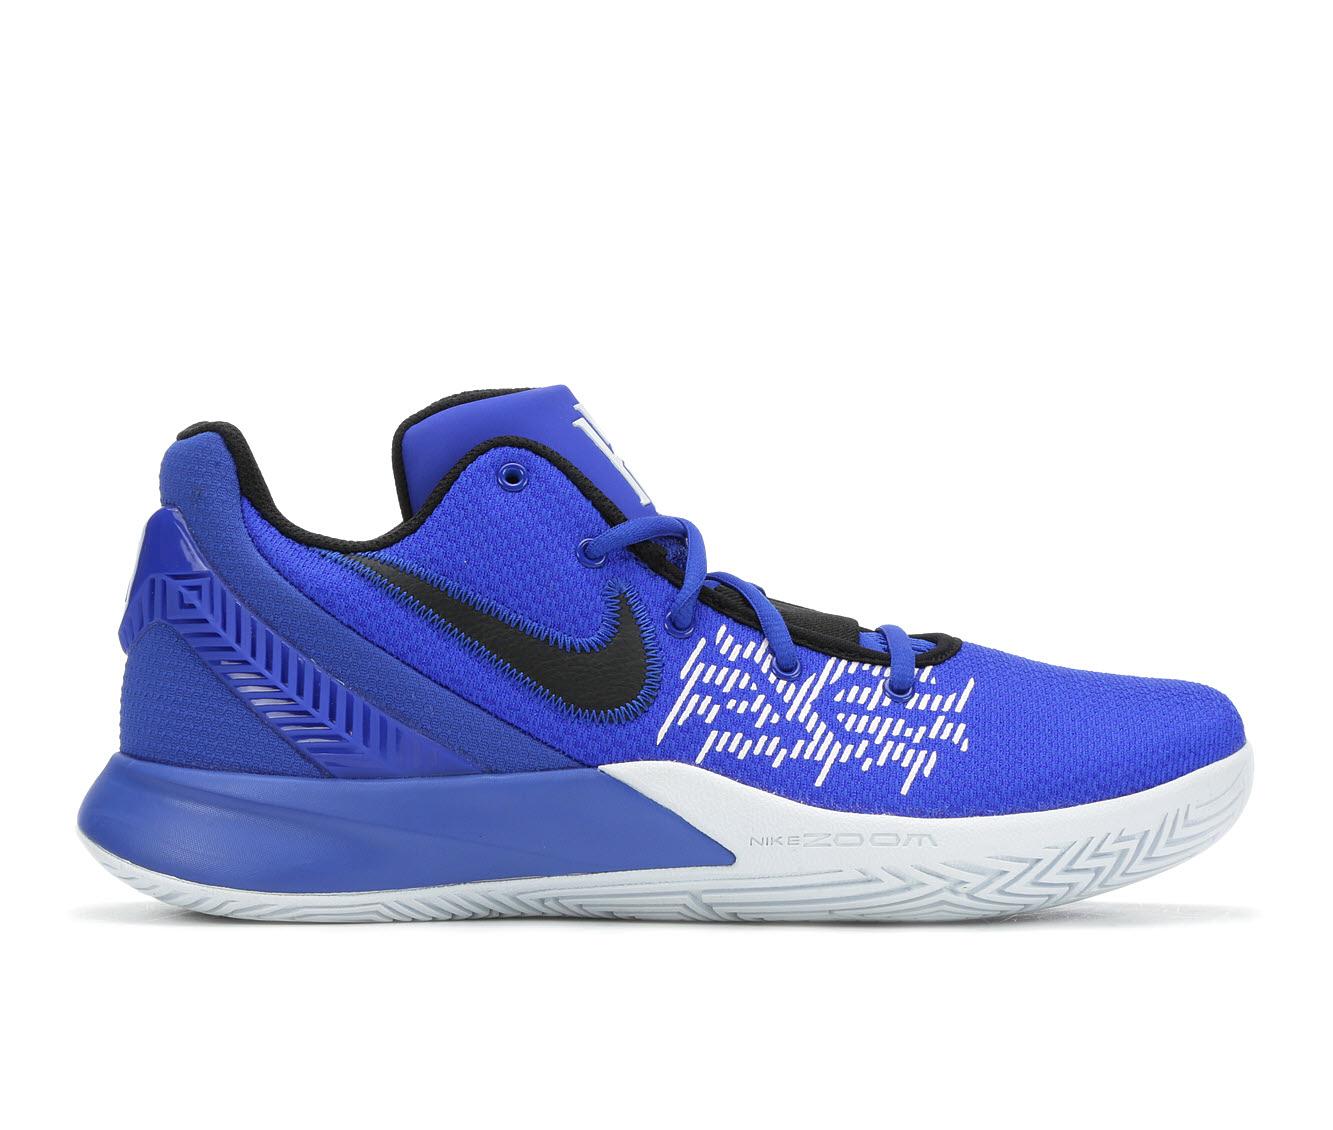 Nike Kyrie Flytrap Ii Basketball Shoe in Blue/Black/White (Blue) for ...